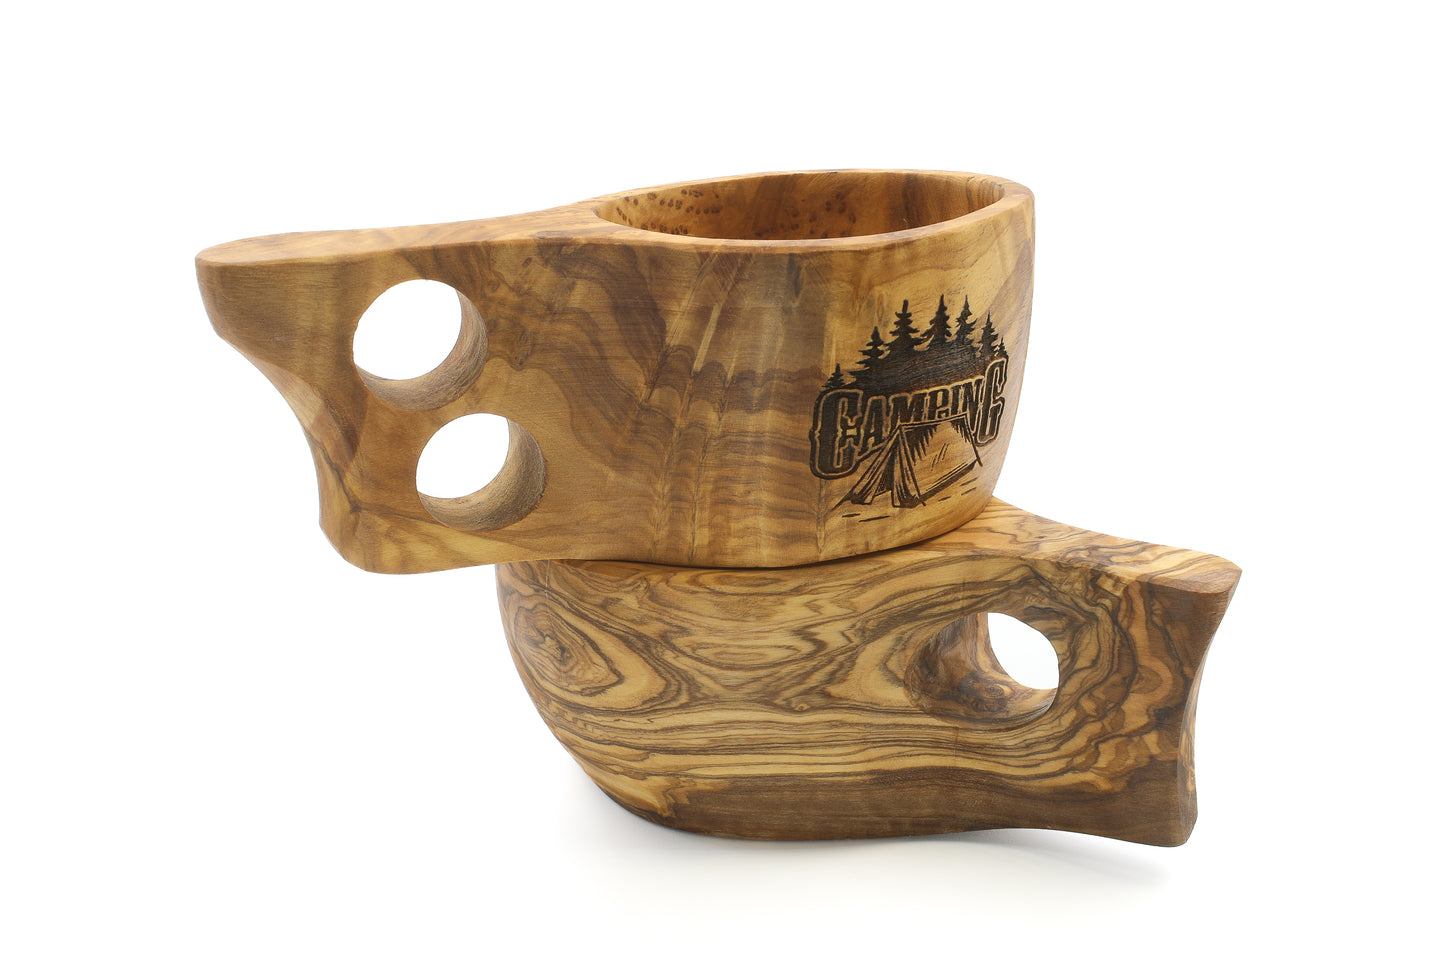 Eco-friendly wooden mug for enjoying your drinks